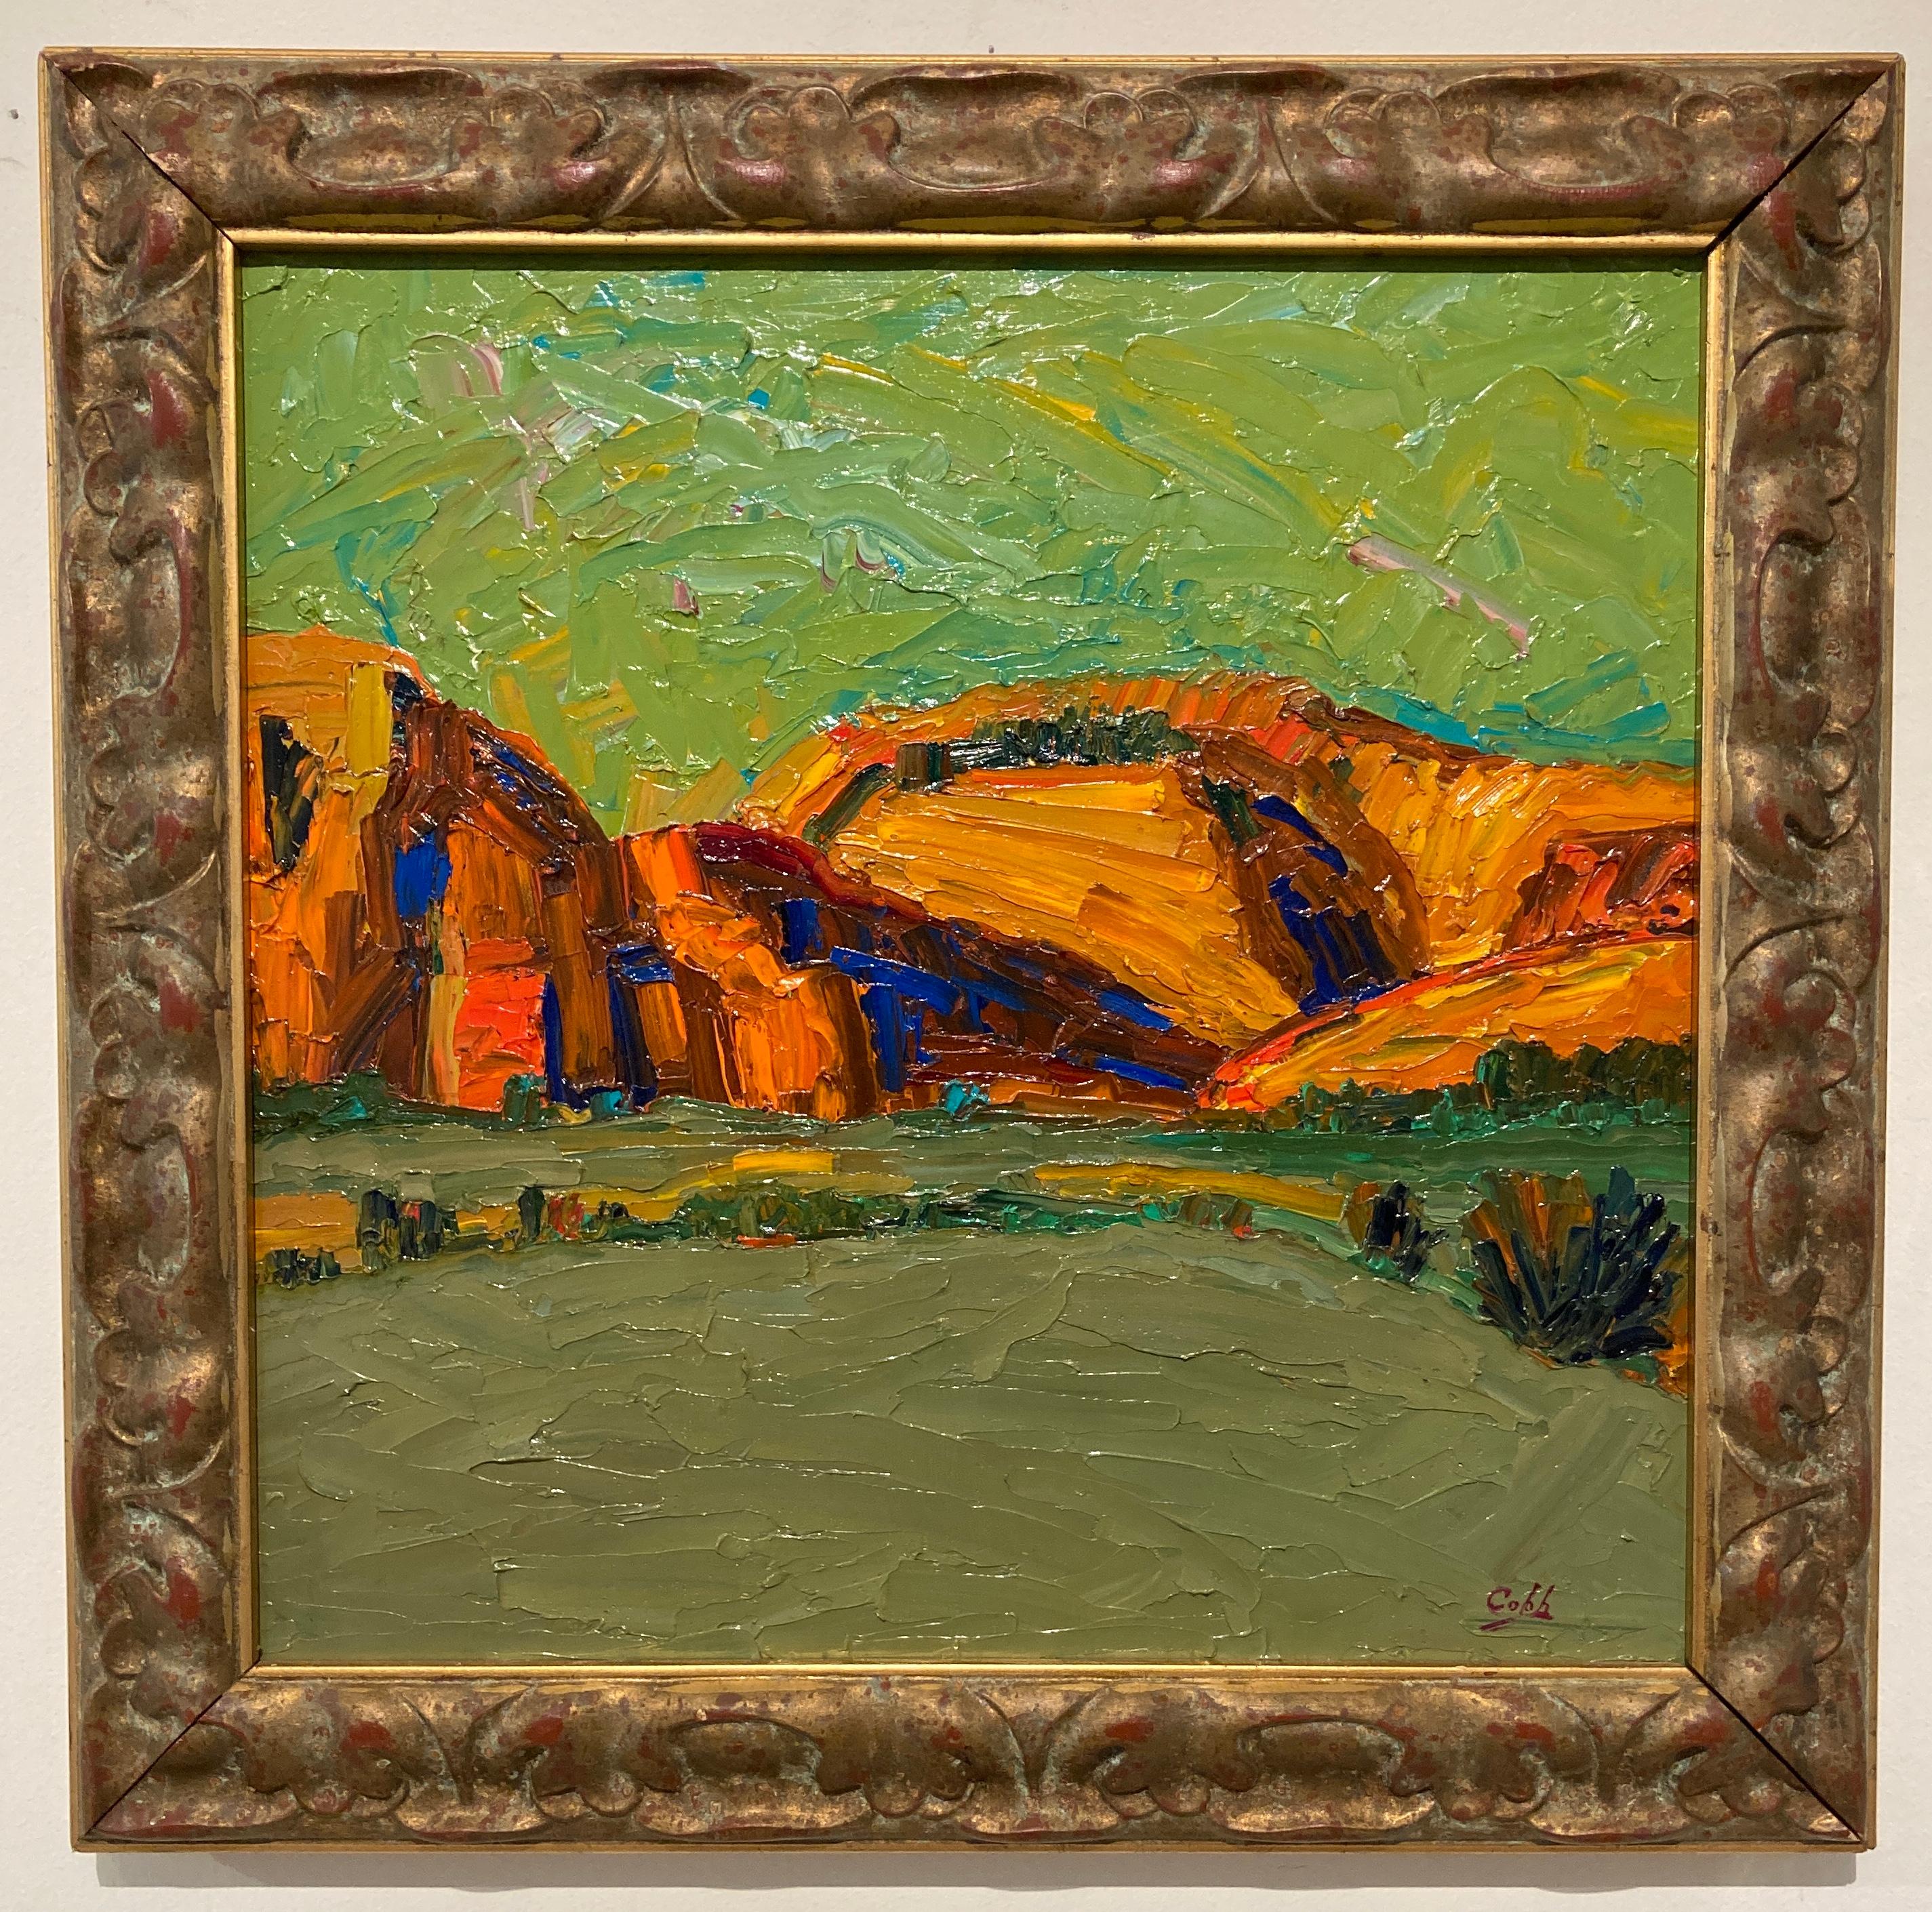 Jim Cobb Landscape Painting - 'Arizona Highways' by James Cobb, Oil on Panel Painting